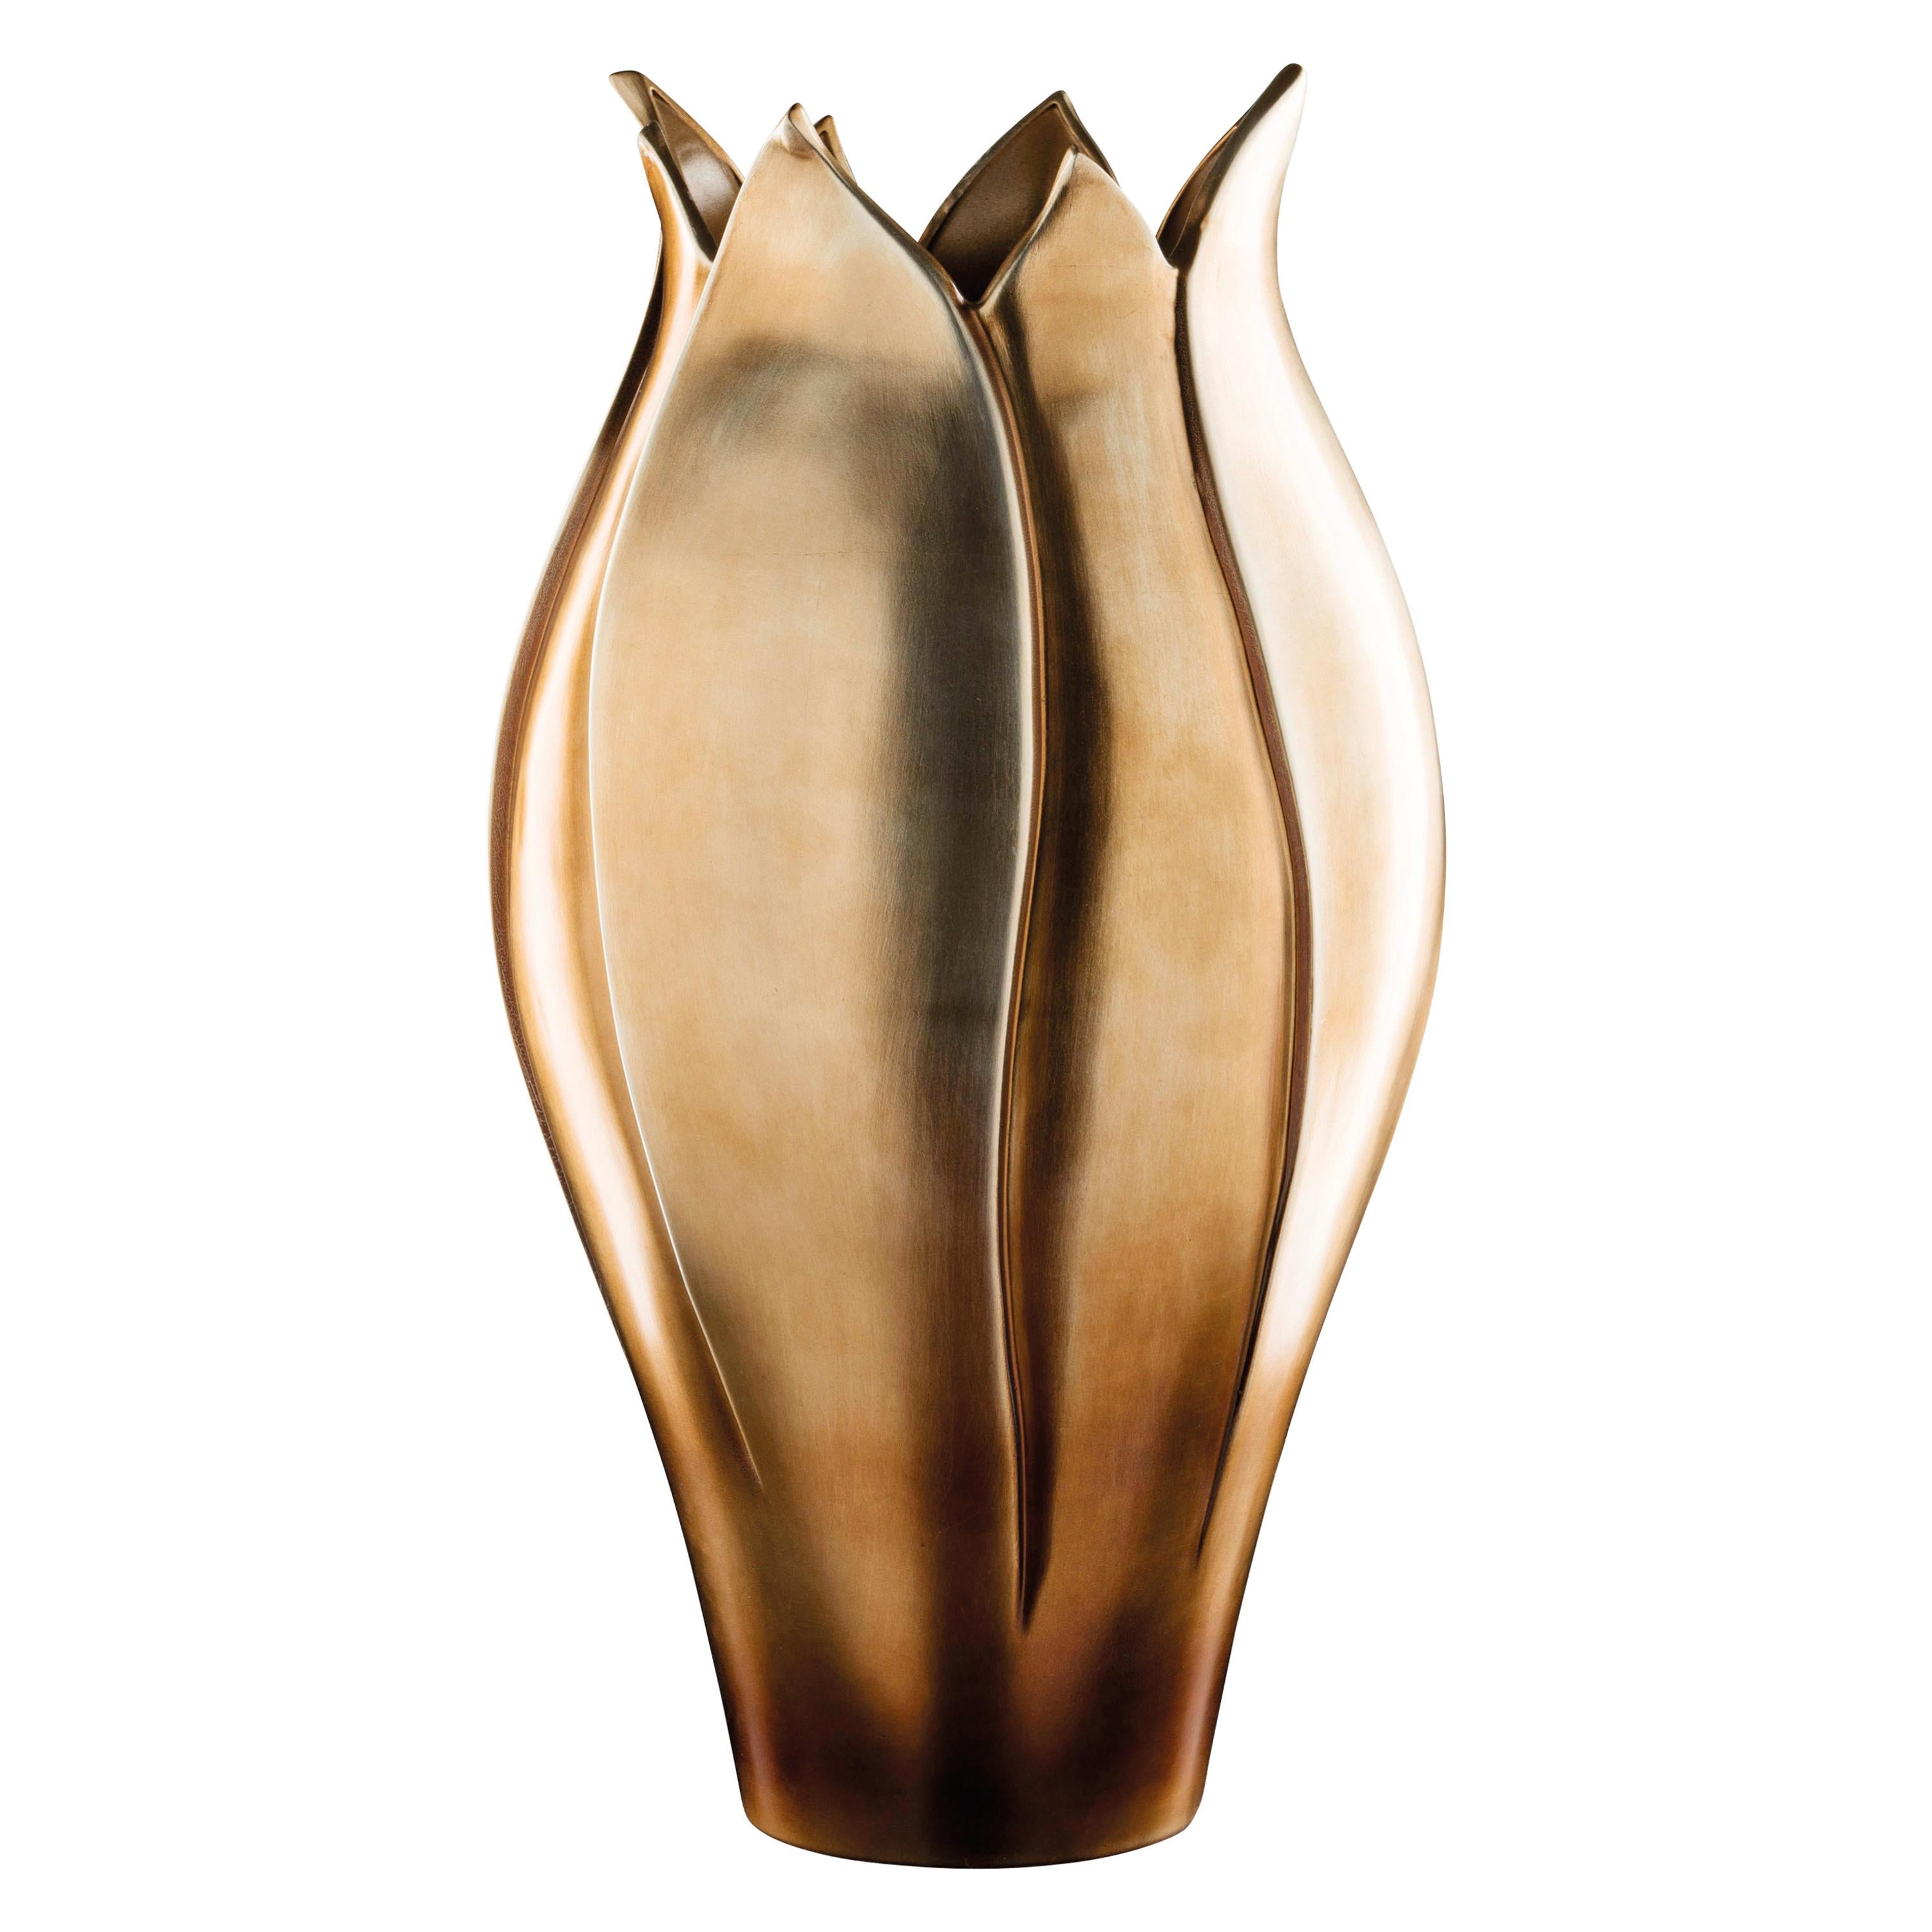 Vase Tulip High, Ceramic, Brass Metal Finish, Italy